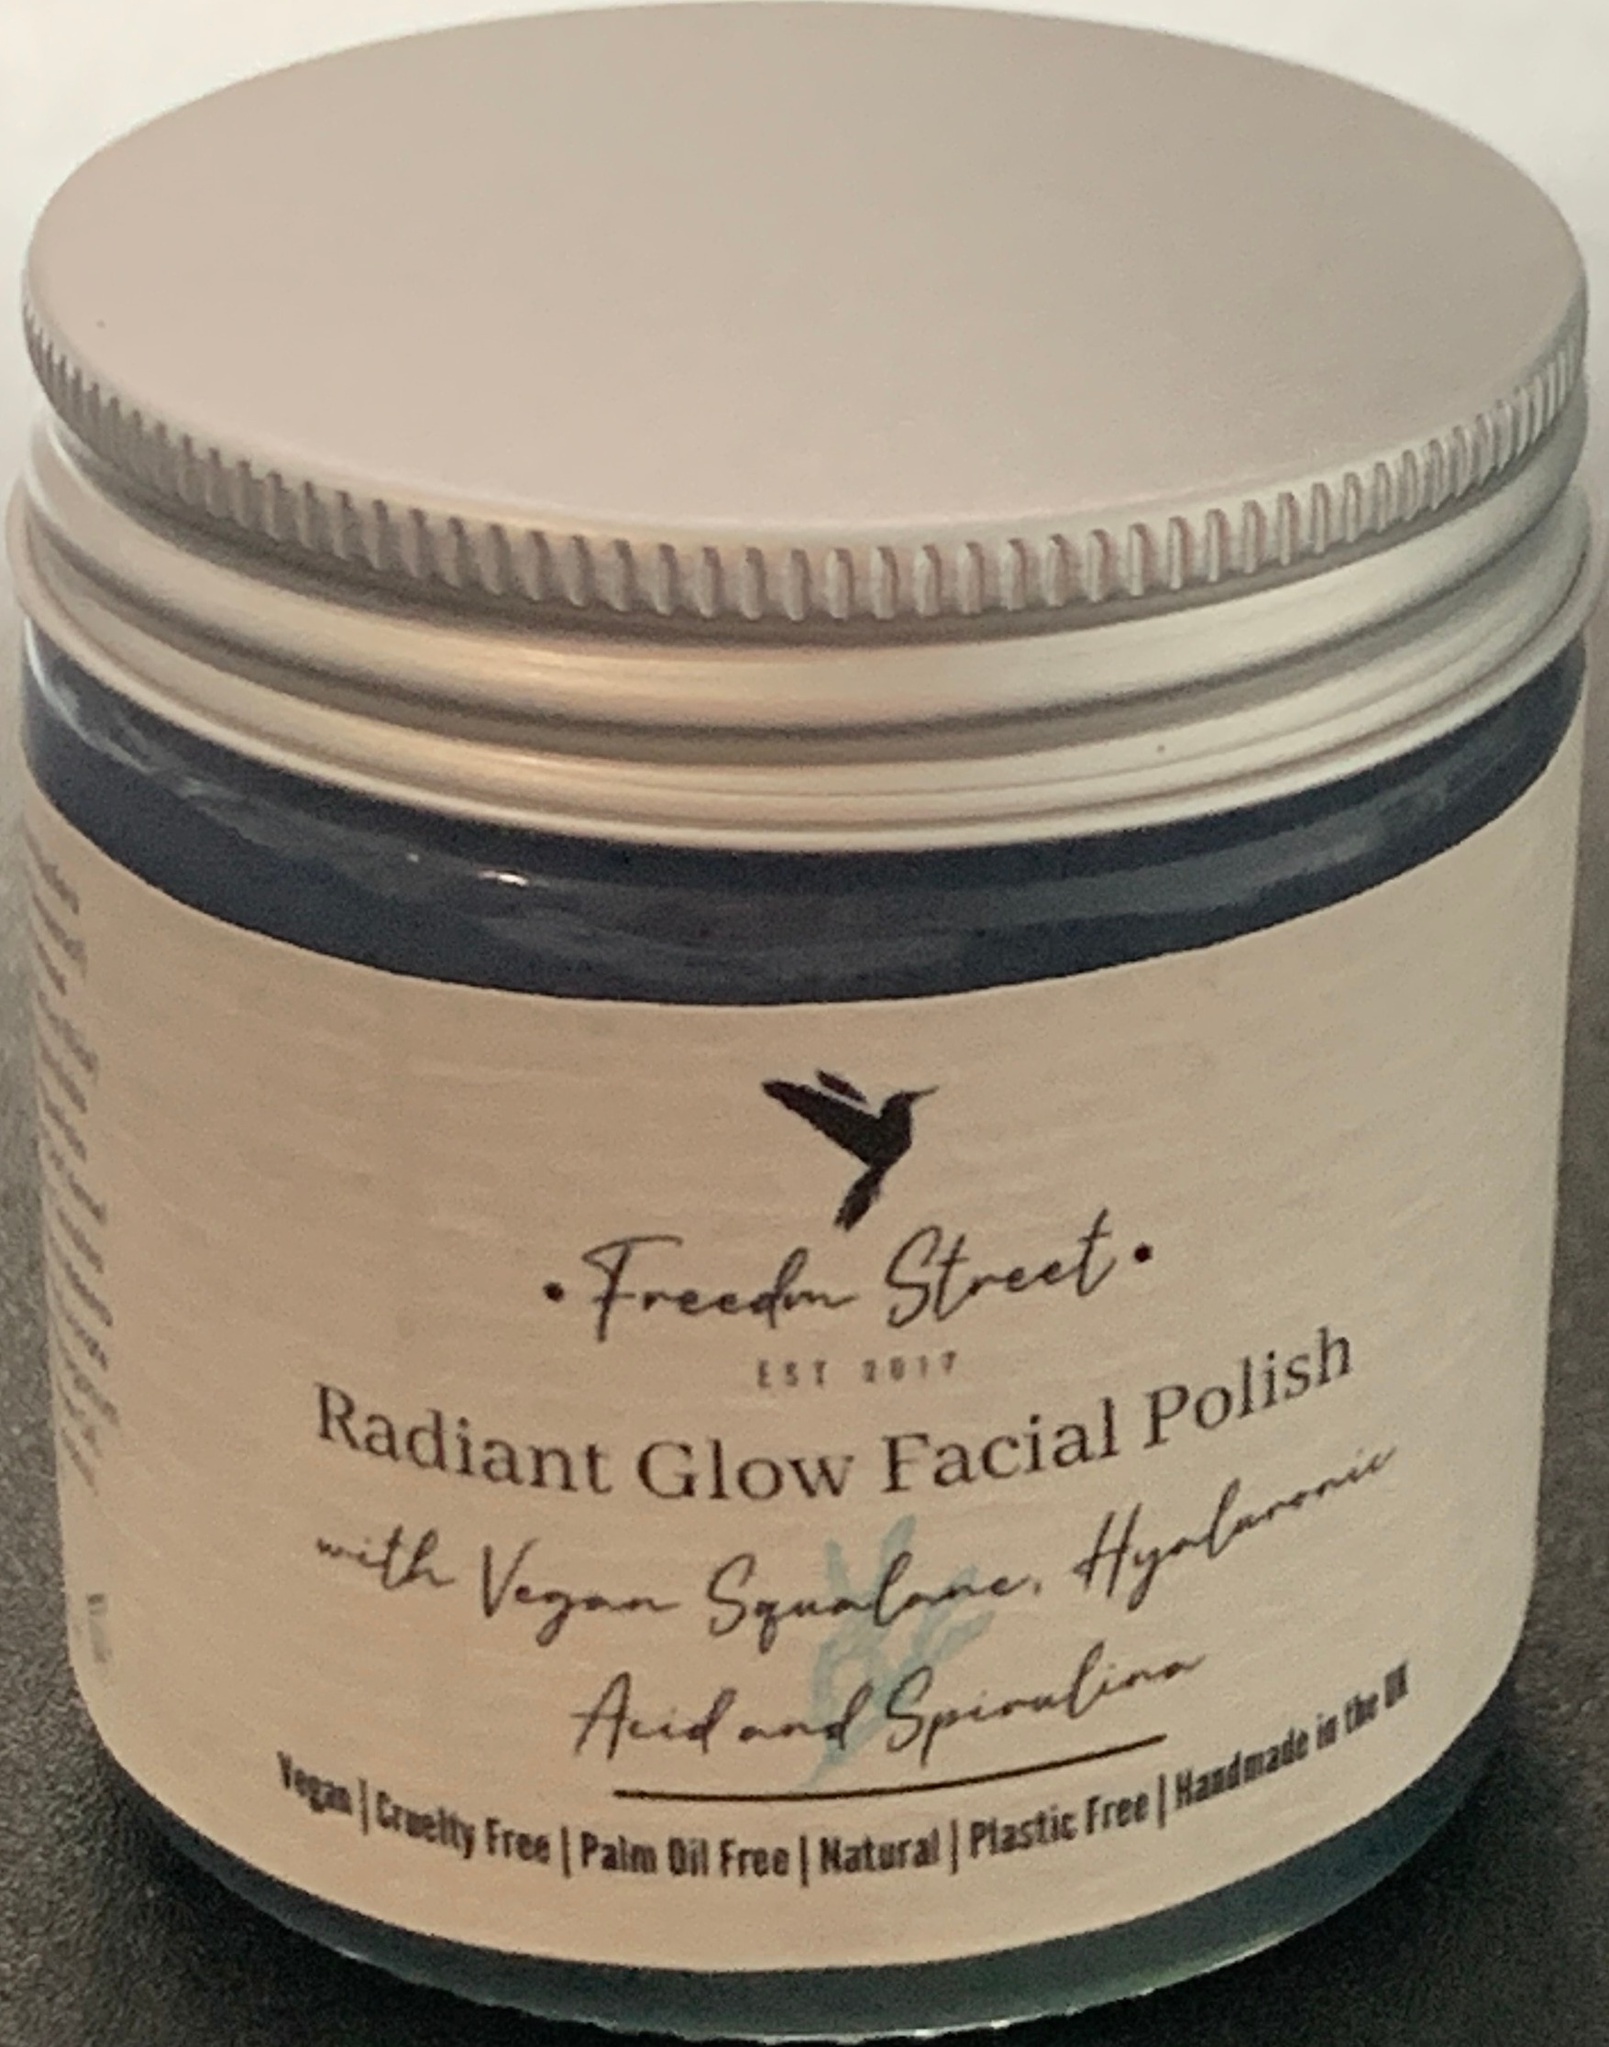 Freedm Street Radiant Glow Facial Polish